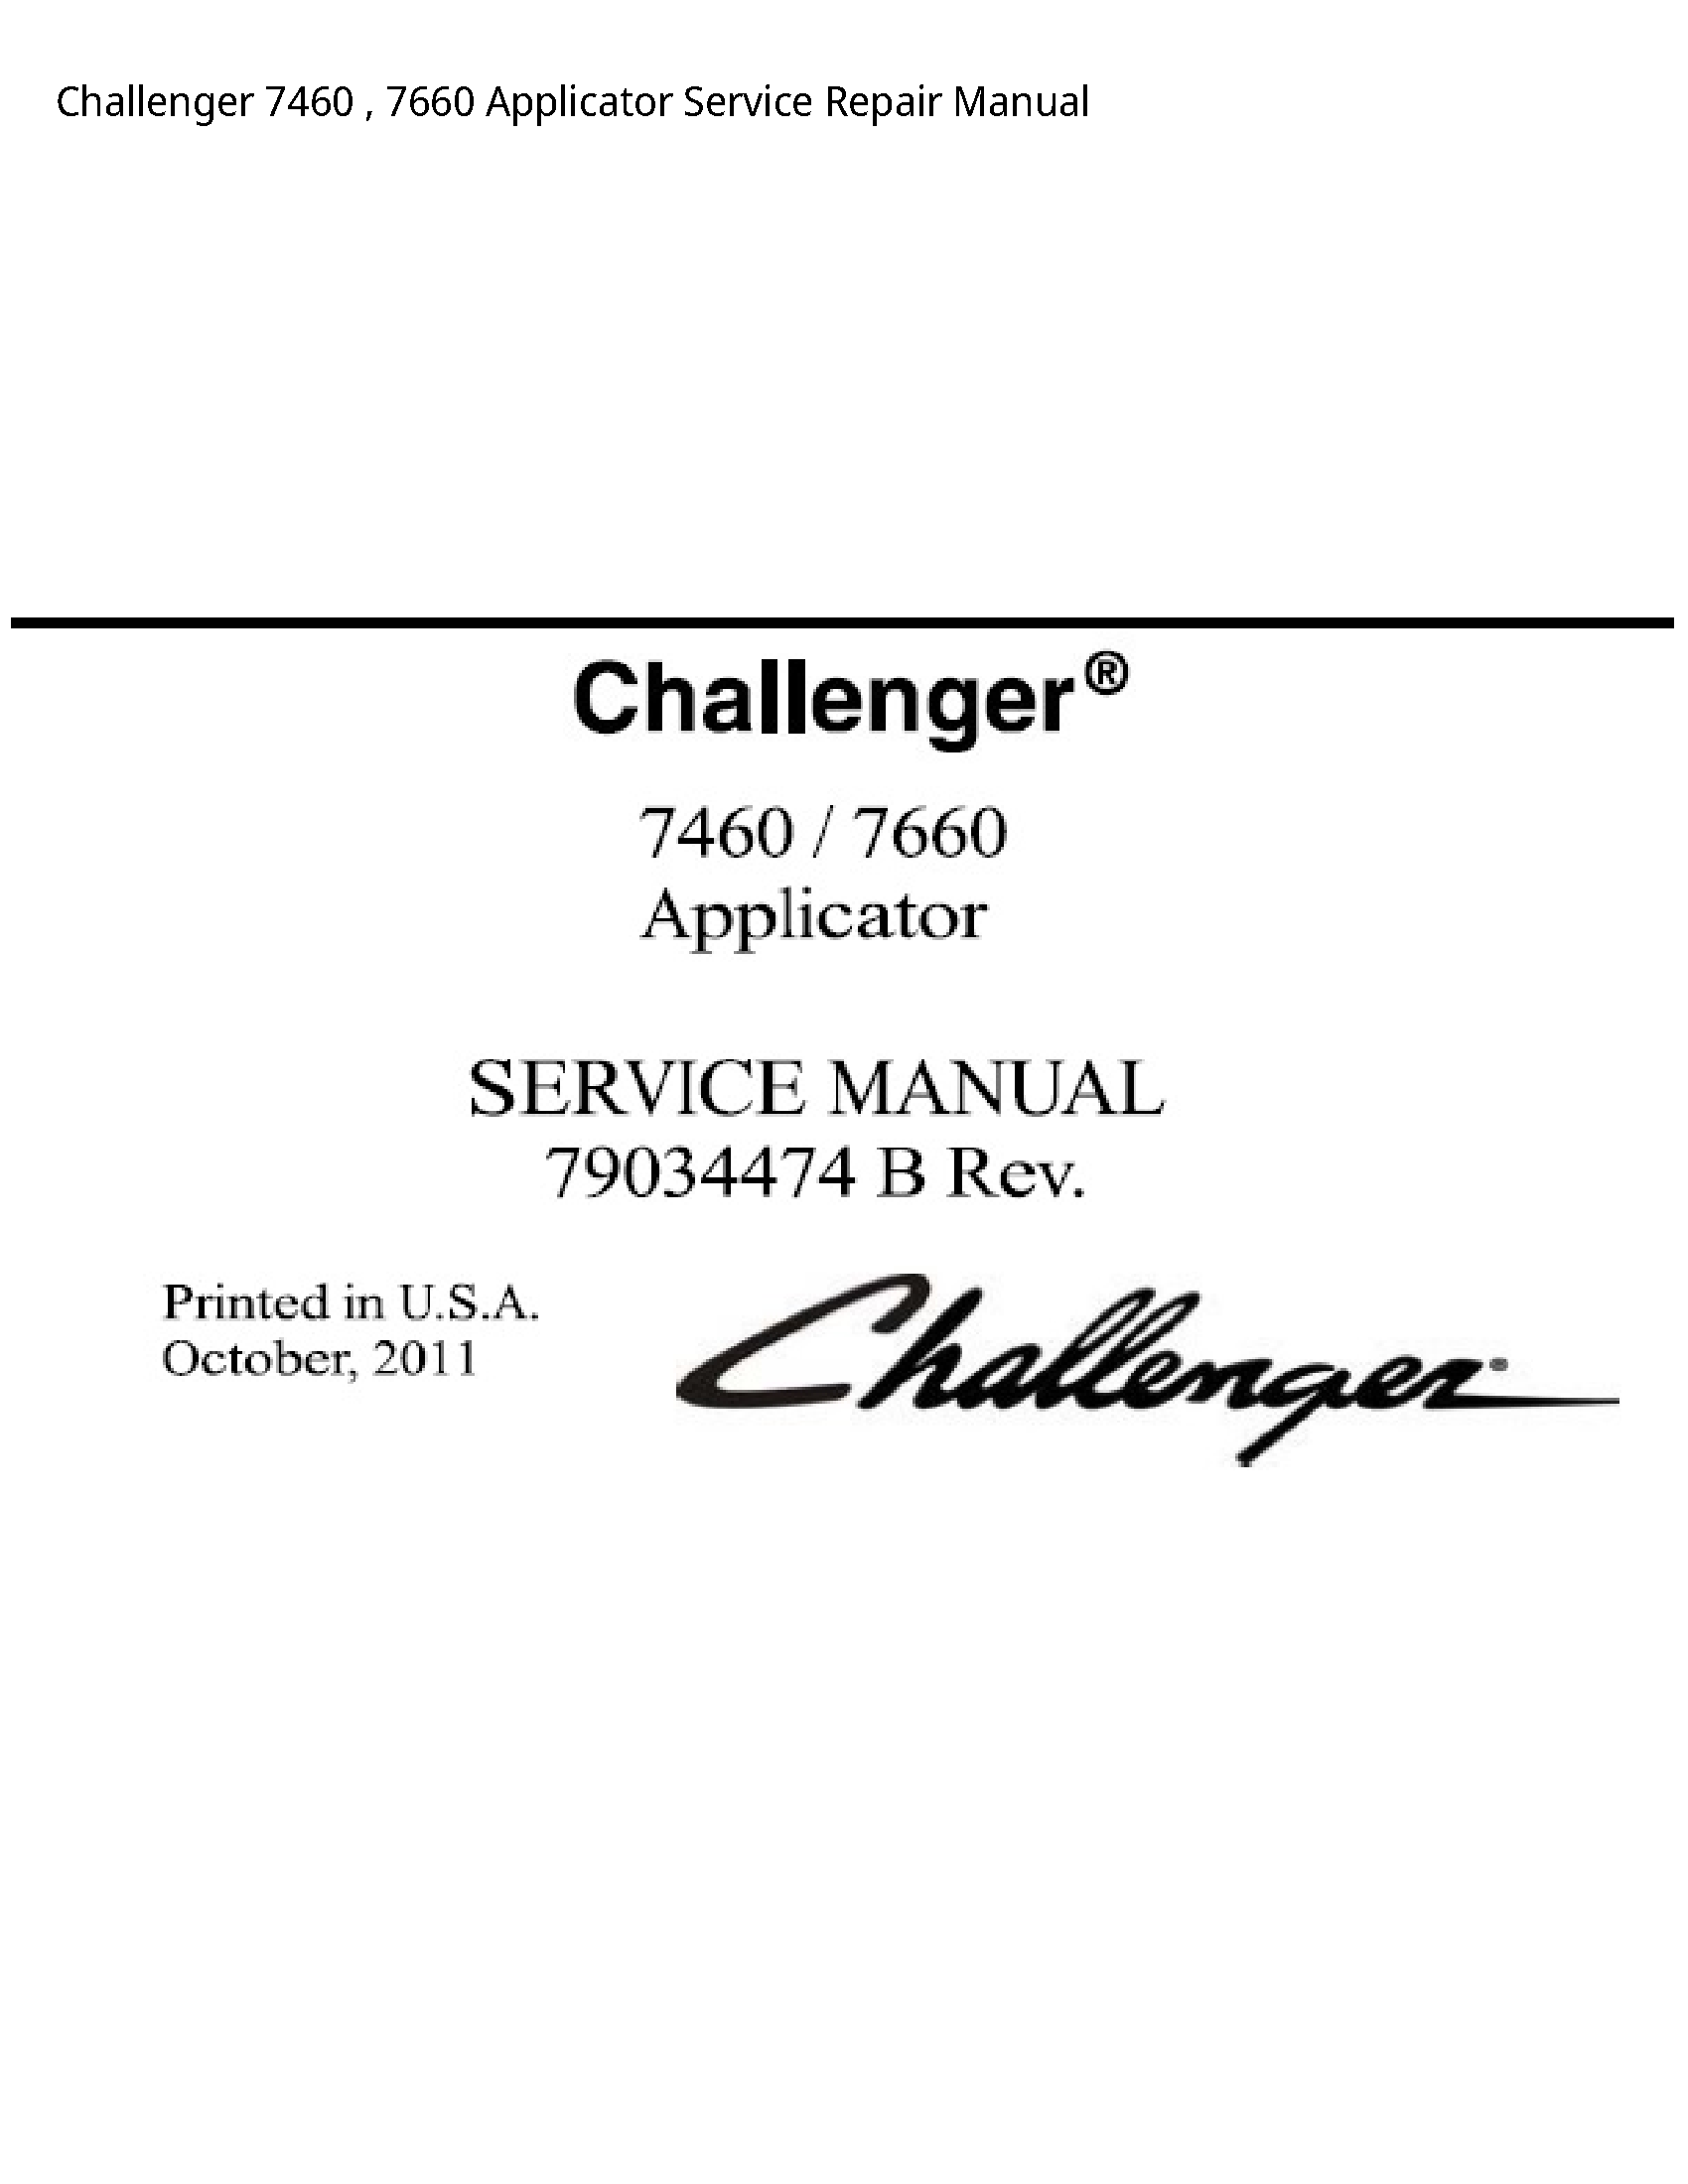 Challenger 7460 Applicator manual